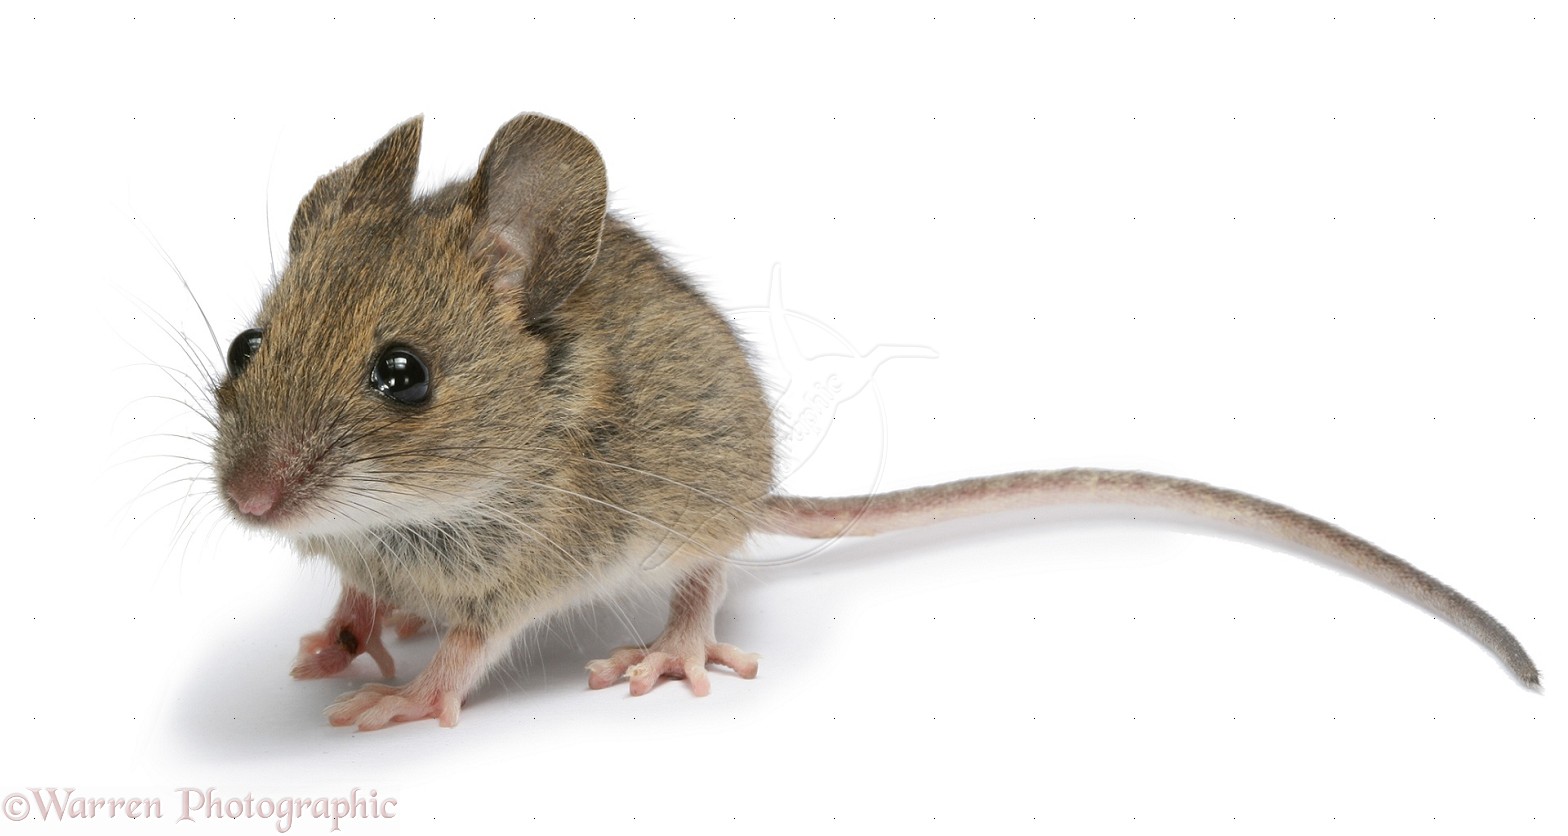 Nice Mice and rats